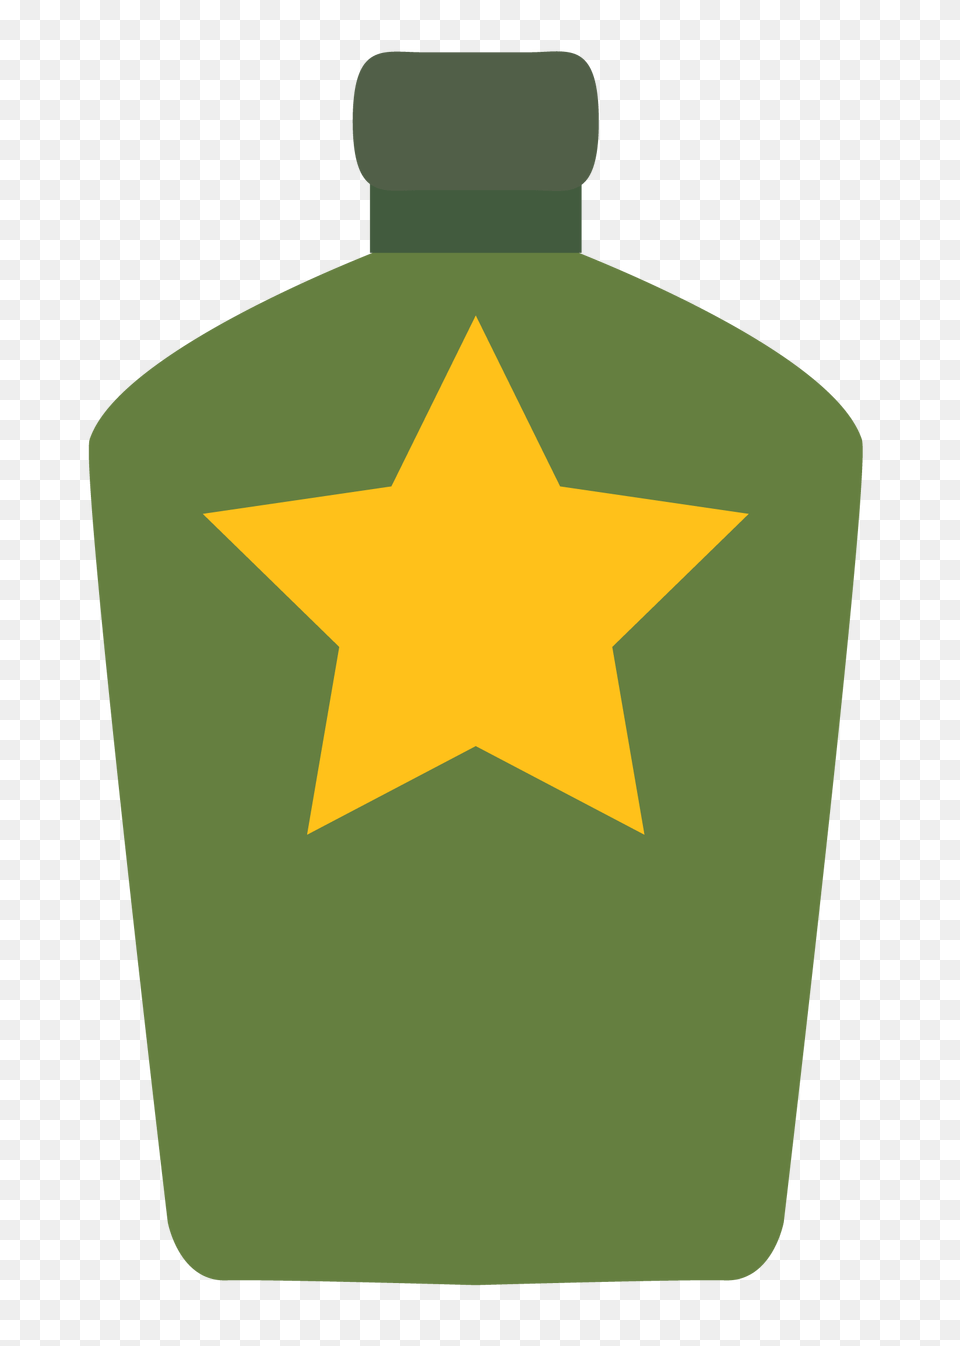 Military Images Clip Art Military Clip Art Images Illustrations, Bottle, Symbol, Cross, Star Symbol Png Image